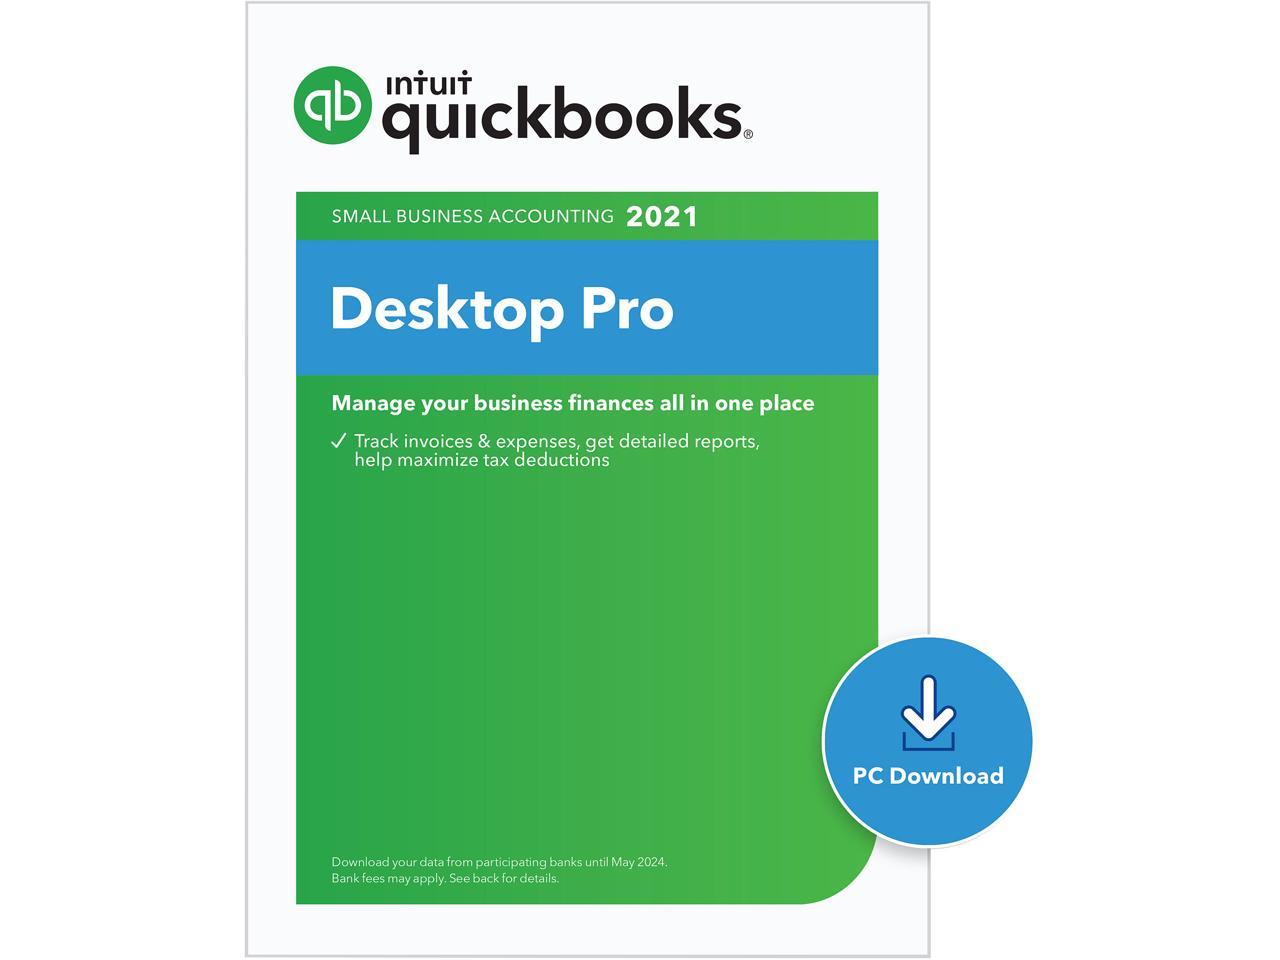 free quickbooks 2014 download